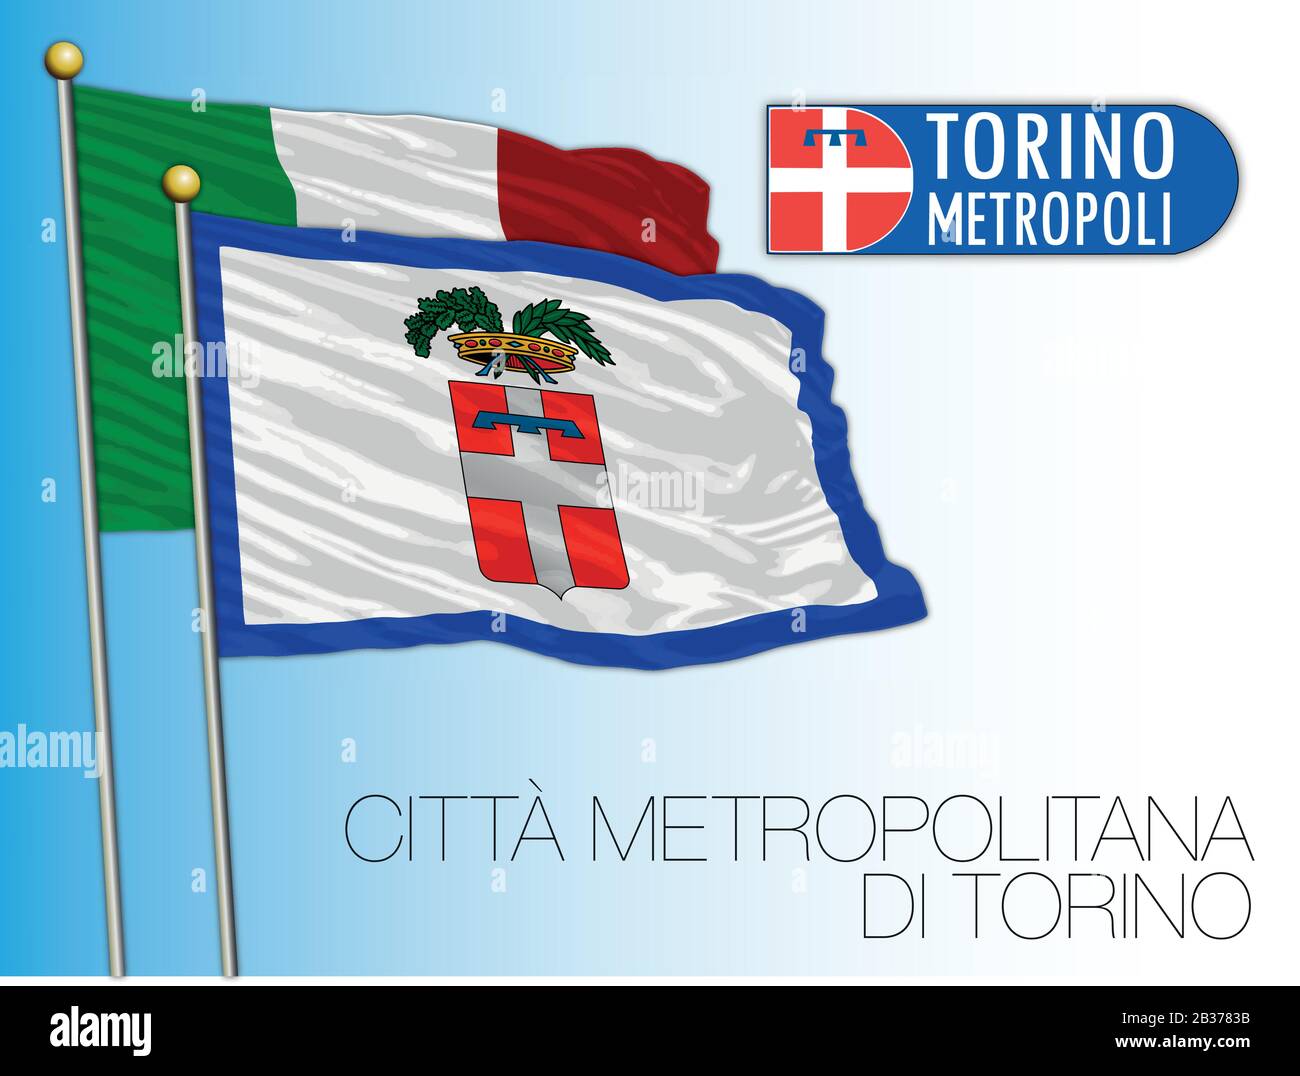 Citta Metropolitana di Torino, Metropolitanstadt Turin, Flagge und Wappen, Region Piemont, Italien, Vektorgrafiken Stock Vektor